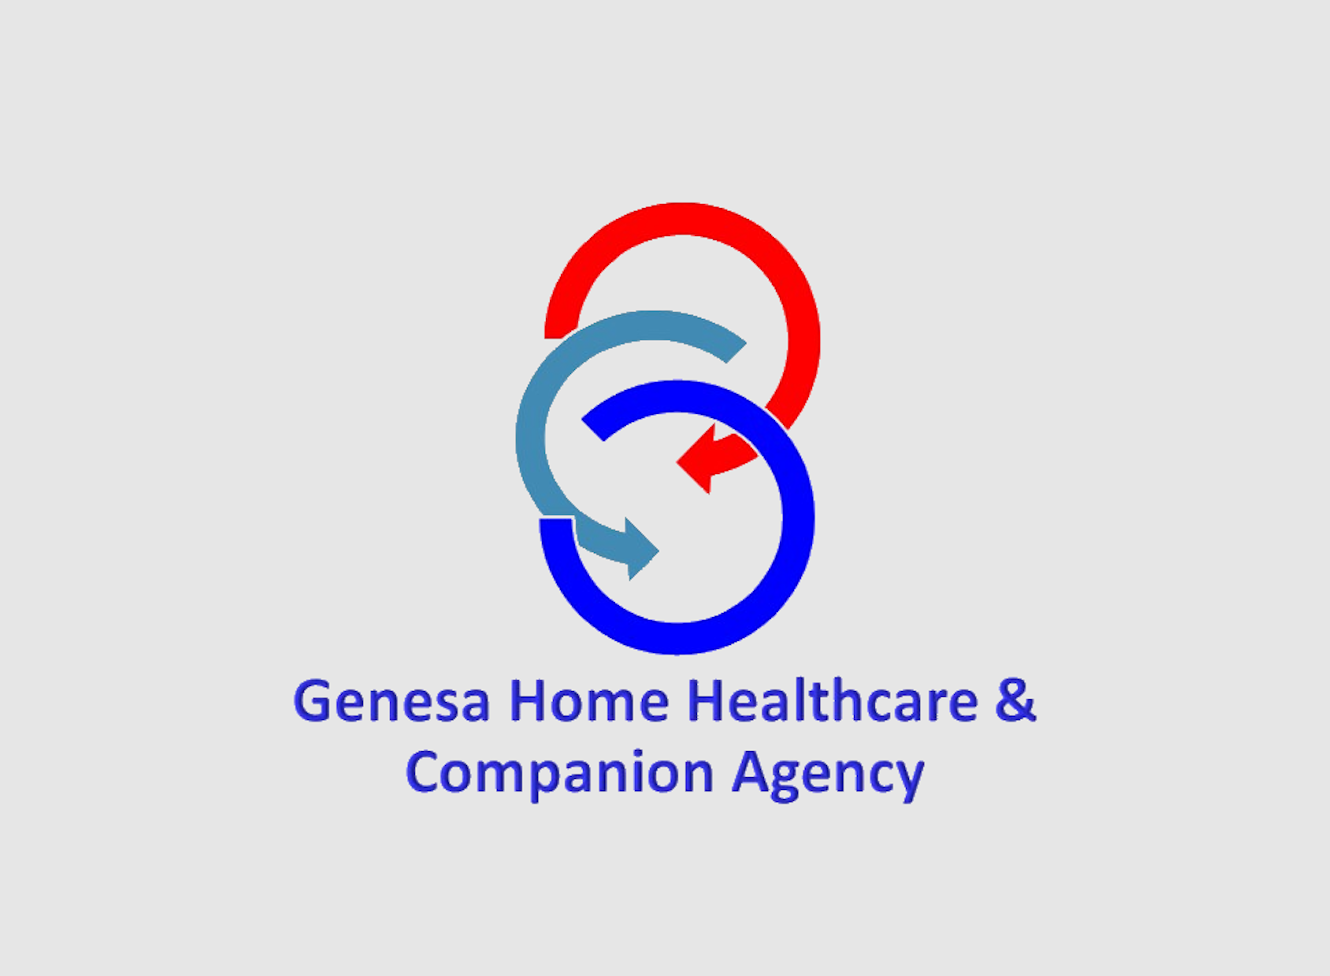 Genesa Home Healthcare & Companion Agency image